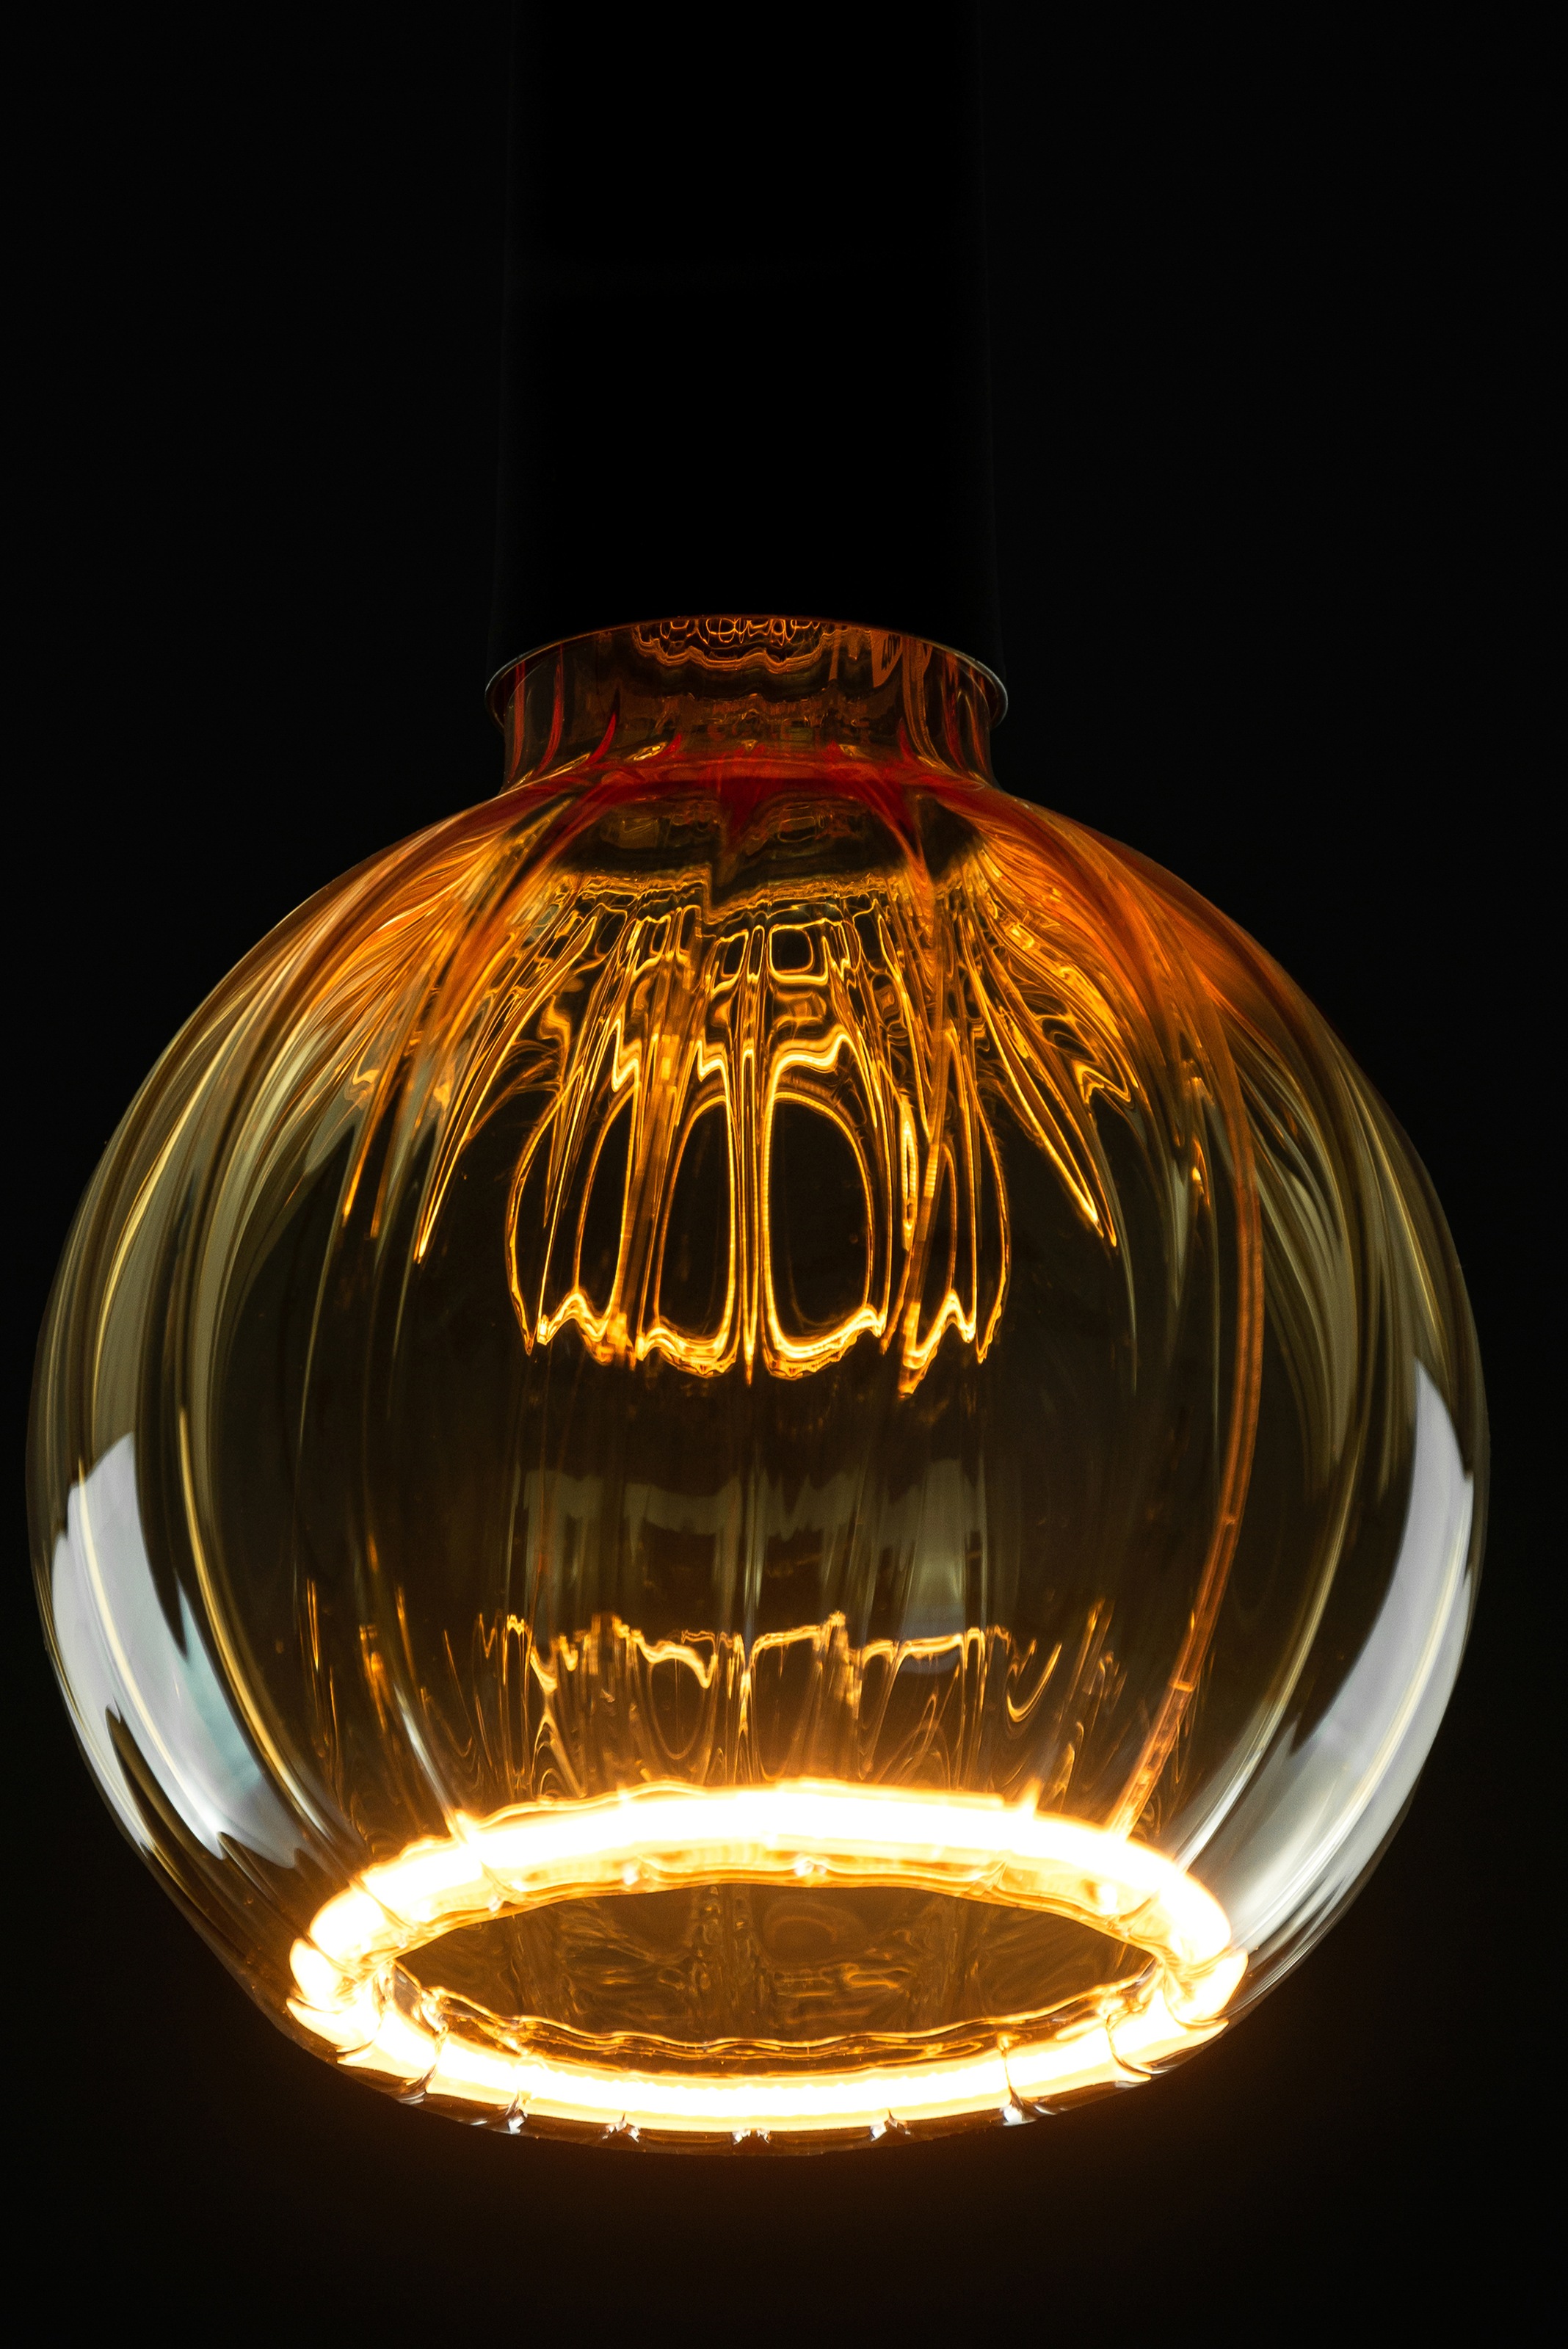 SEGULA LED-Leuchtmittel »LED Floating Globe 125 straight gold«, E27, Warmweiß, dimmbar, E27, Floating Globe 125 straight gold